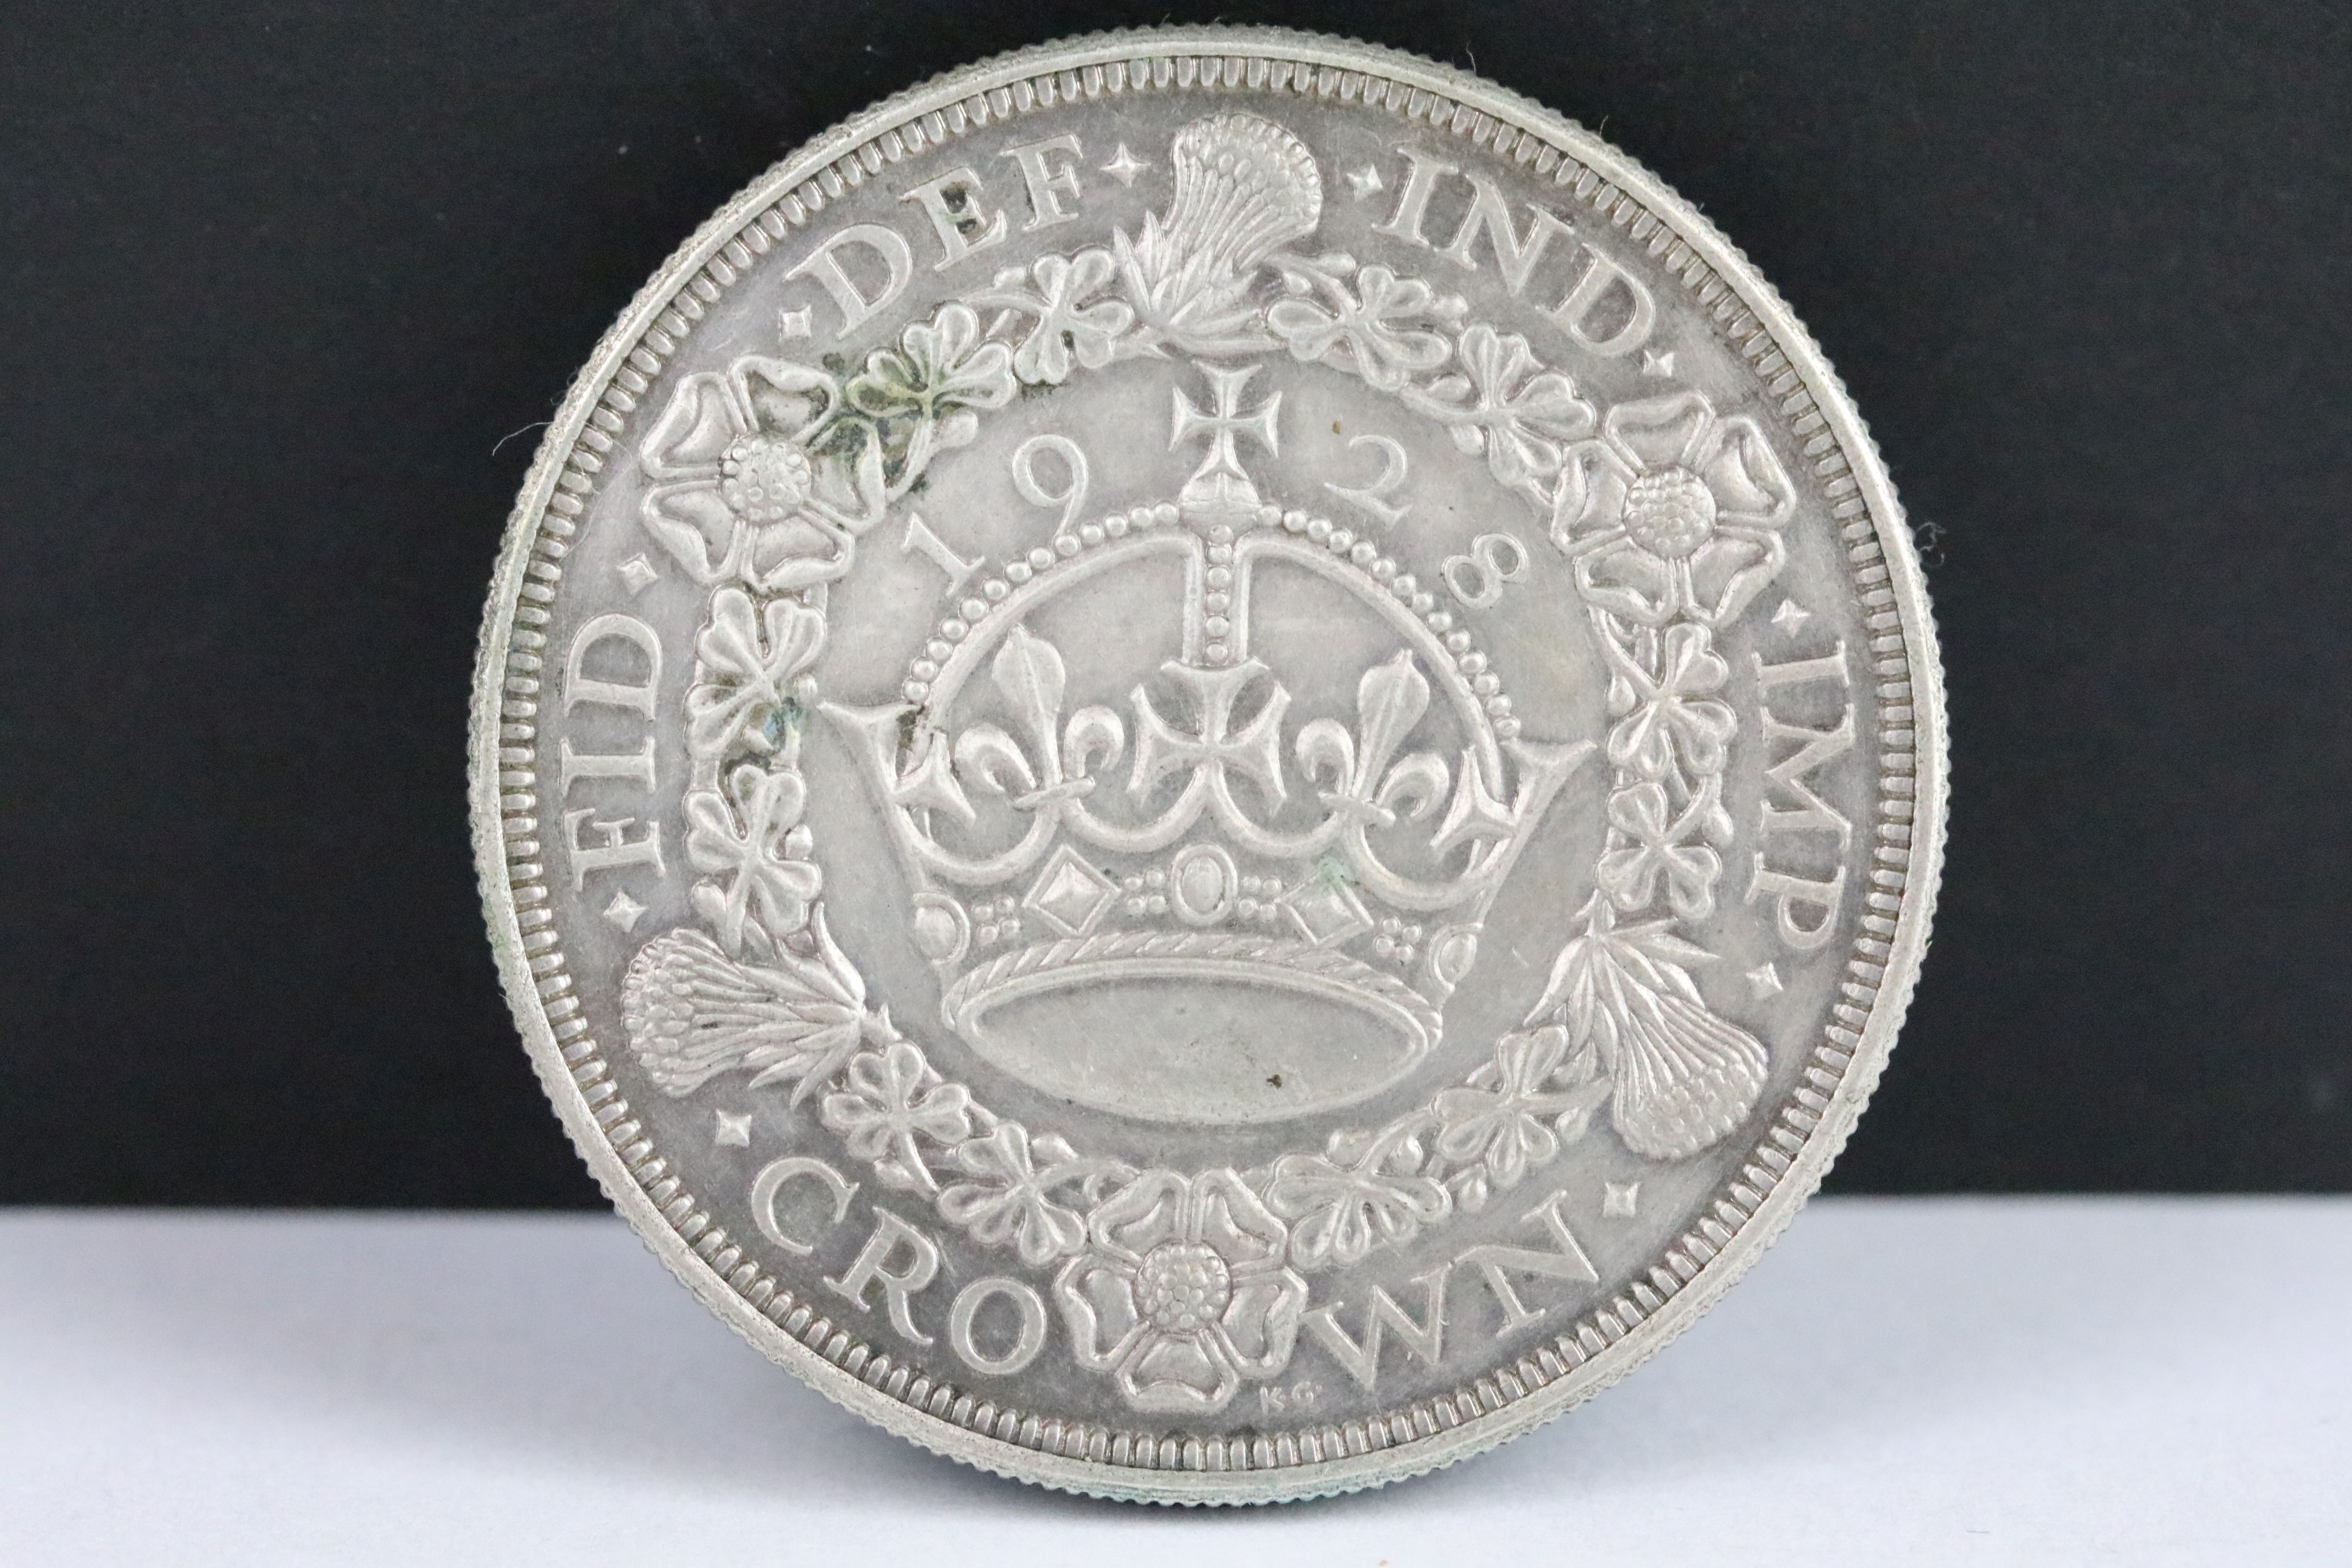 A British King George V 1928 silver Wreath Crown coin.